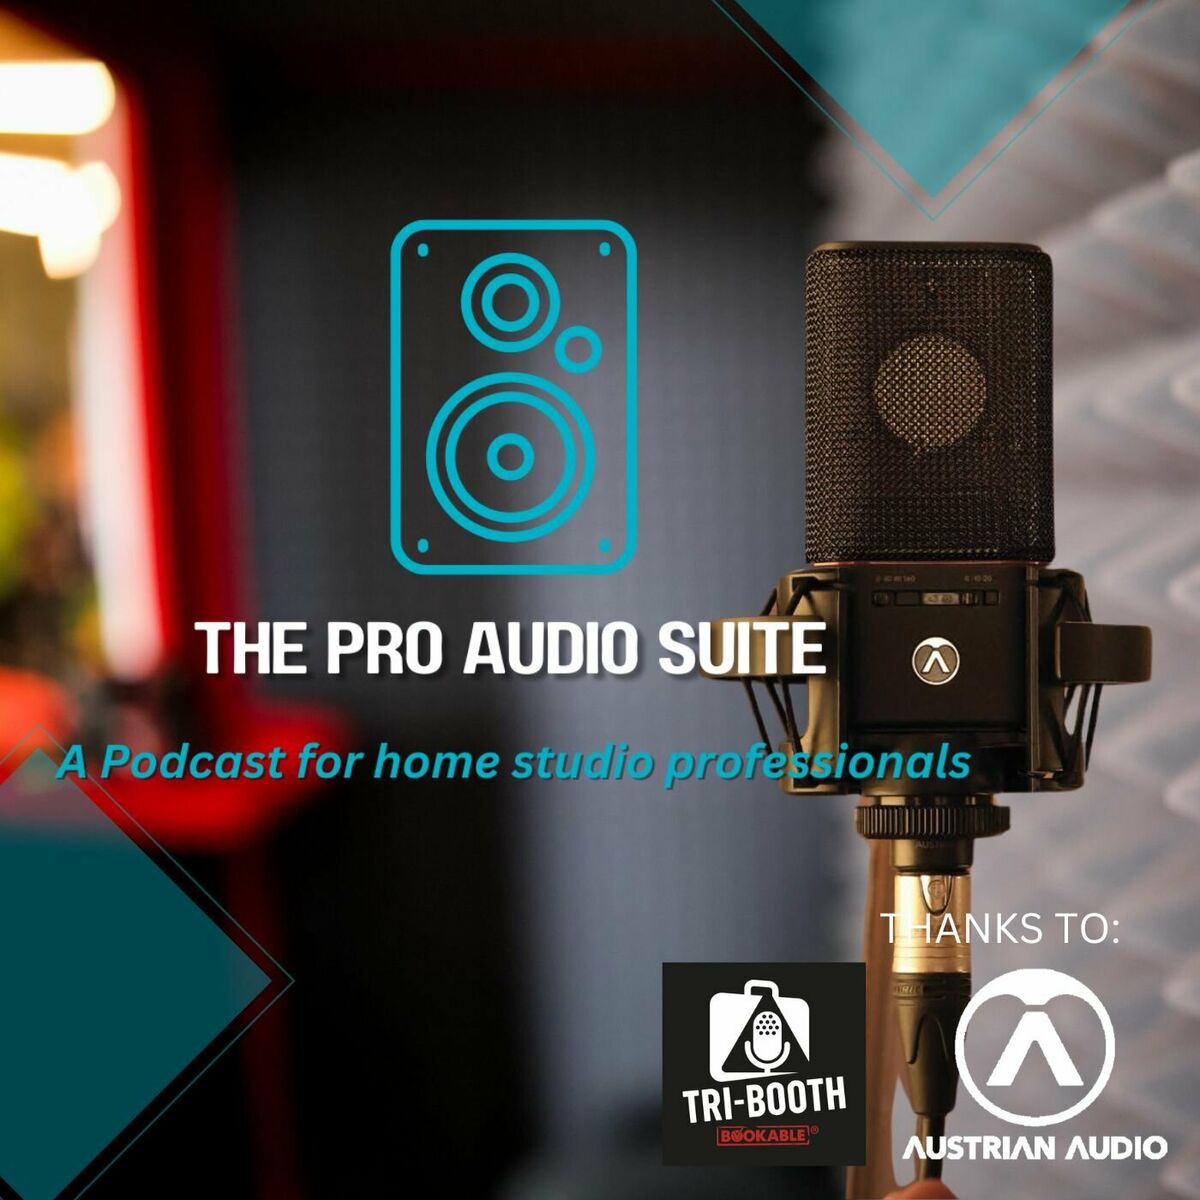 Listen to The Pro Audio Suite podcast | Deezer